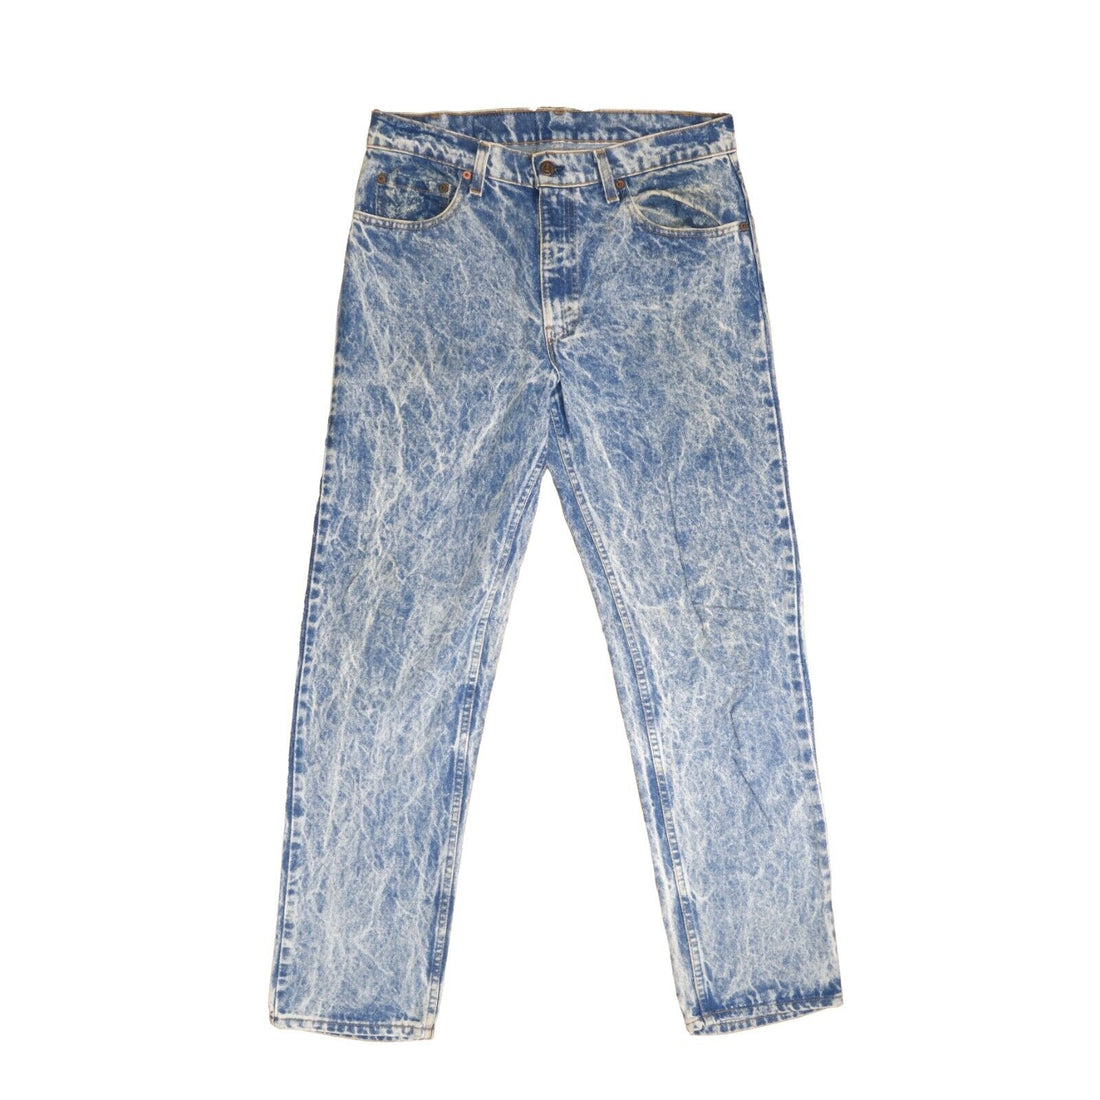 Vintage Levi Strauss & Co Acid Wash Denim Jeans Size 34 X 32 506